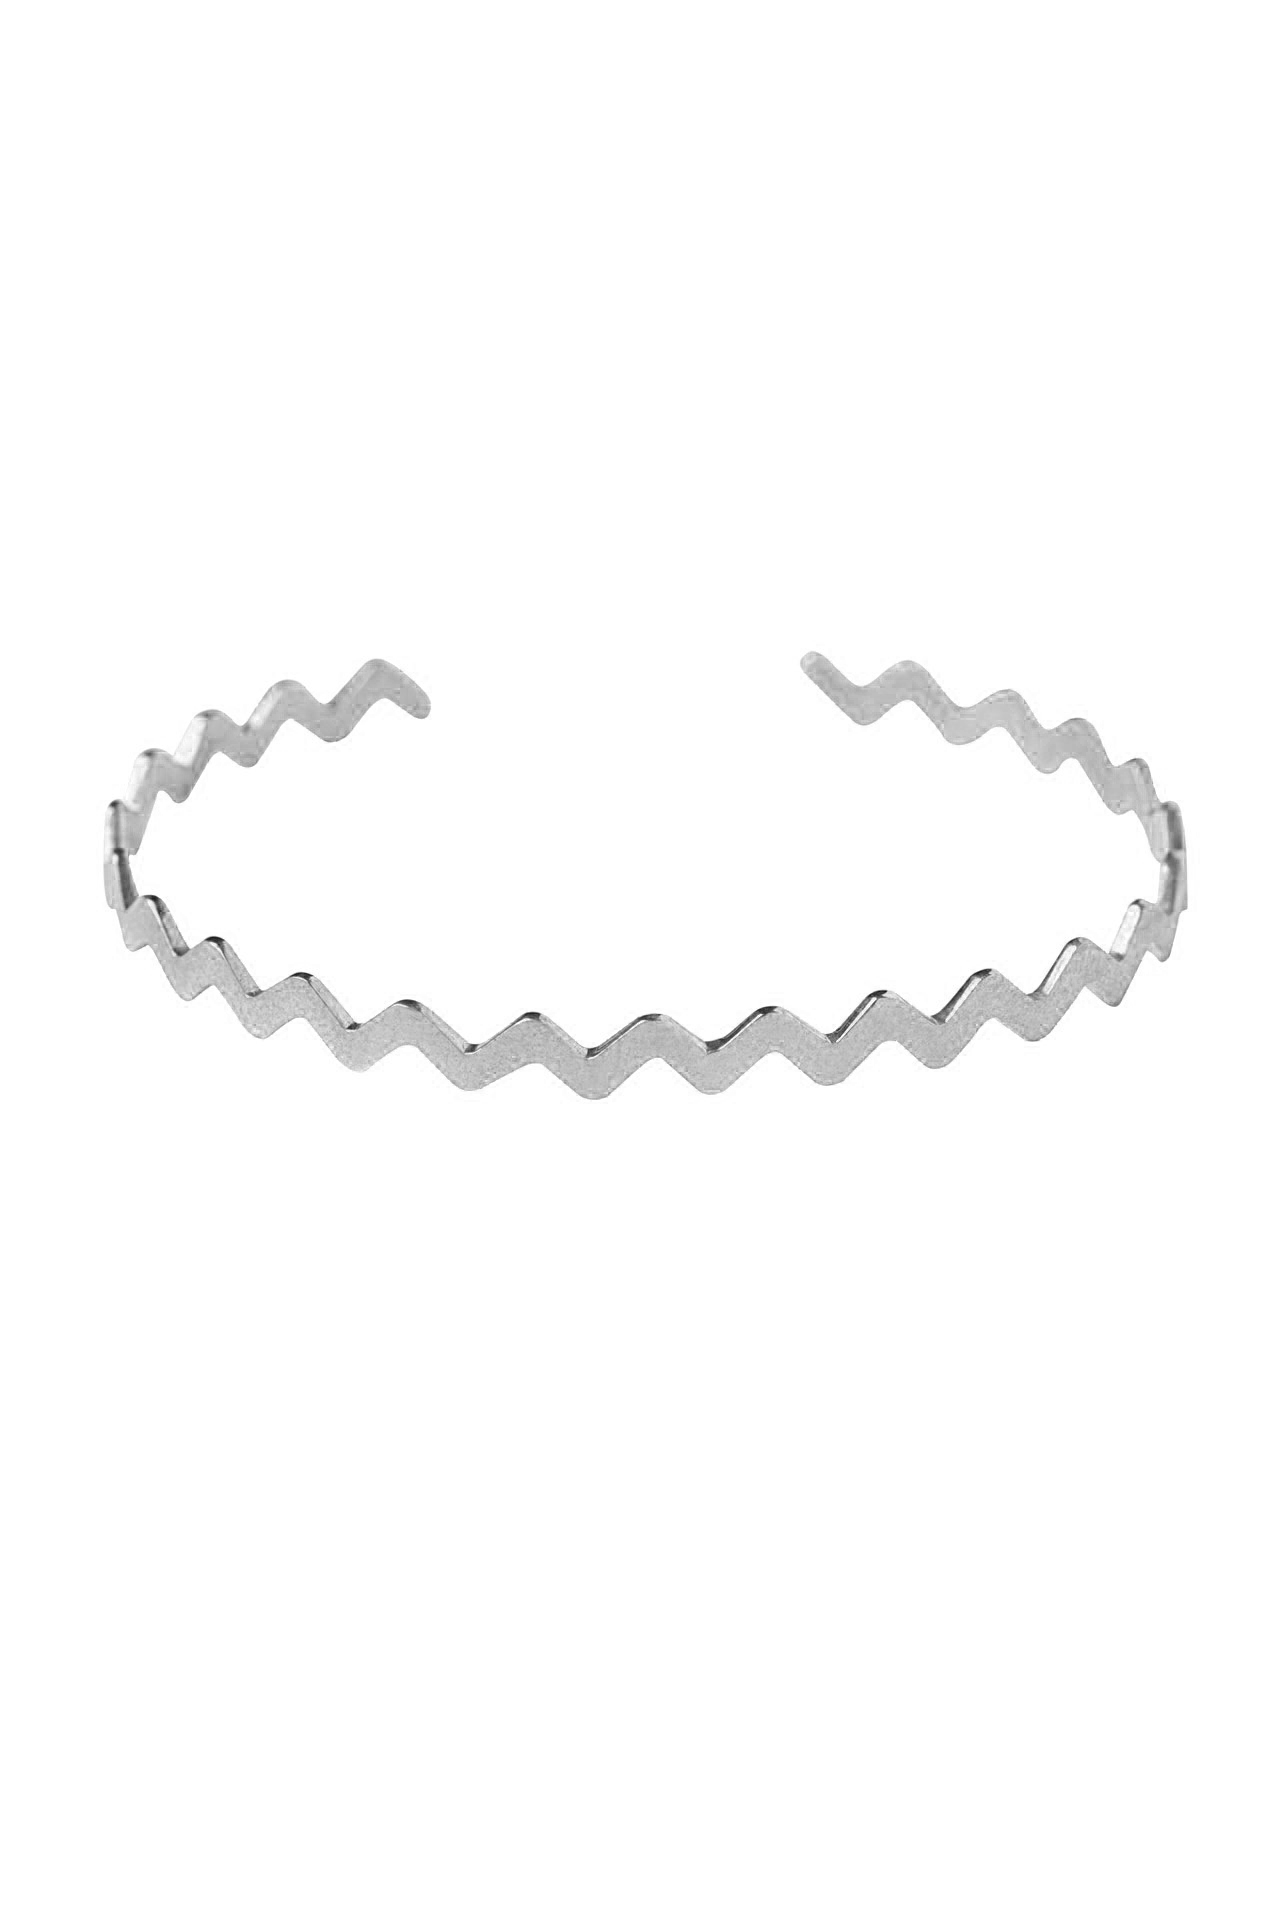 Xzota - Armbanden - Cuff pattern - Silver